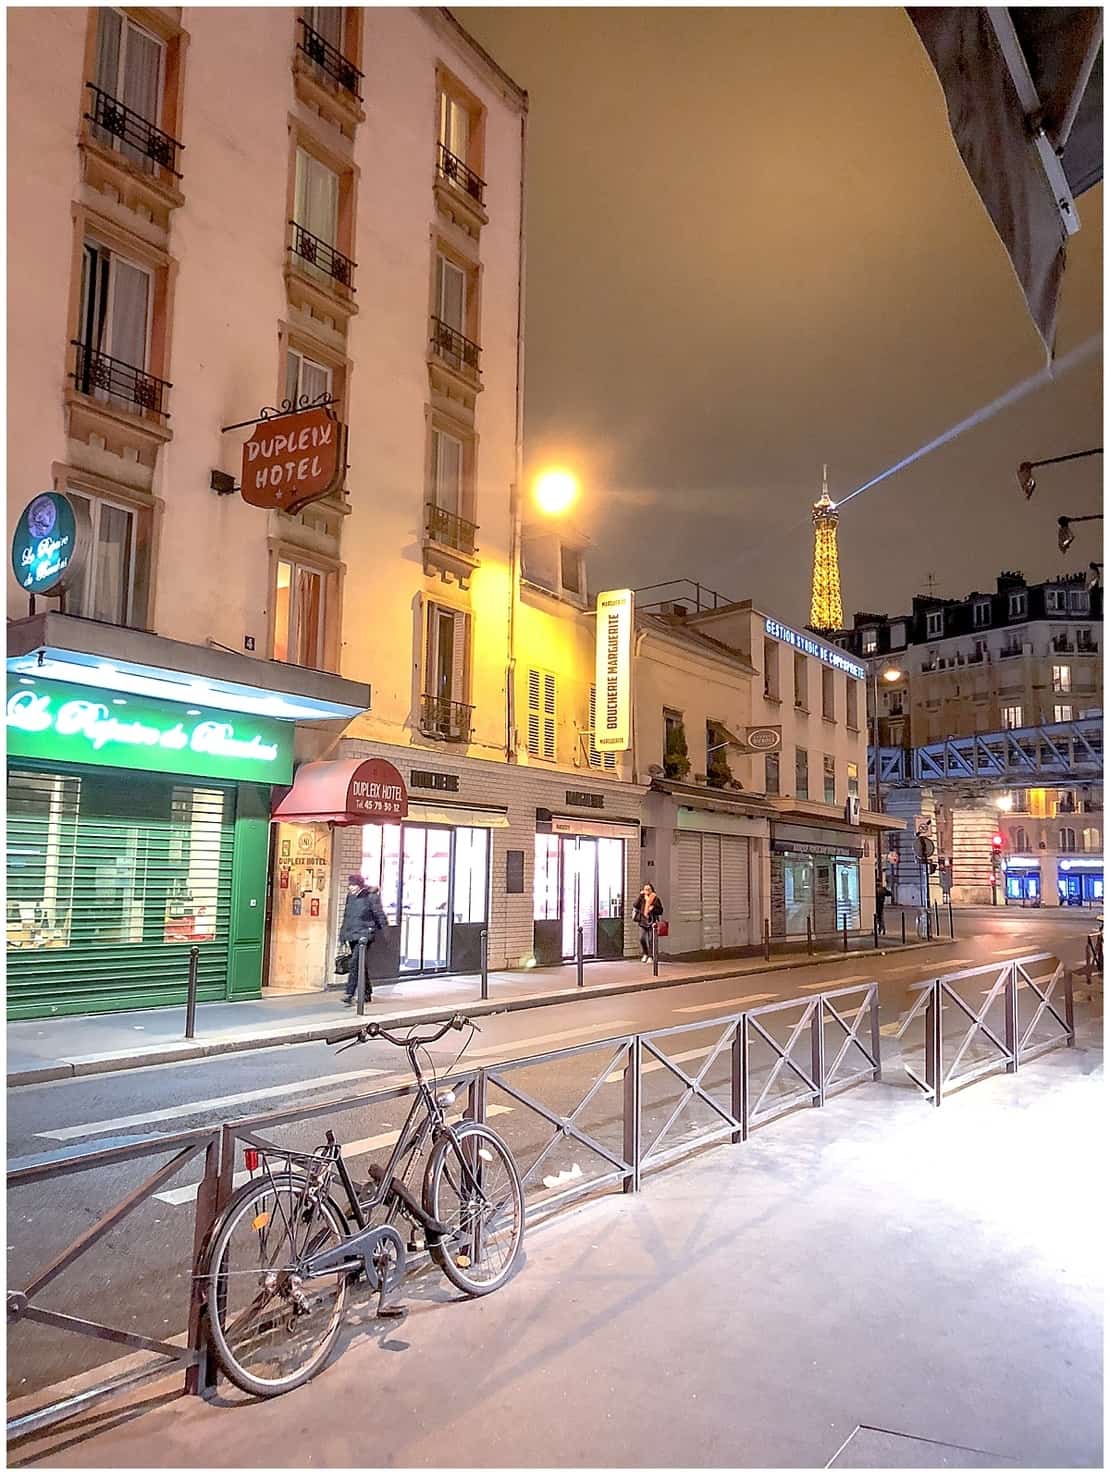 France - Paris - Bicycle in street scene near Dupleix Metro in Paris with view of Eiffel Tower